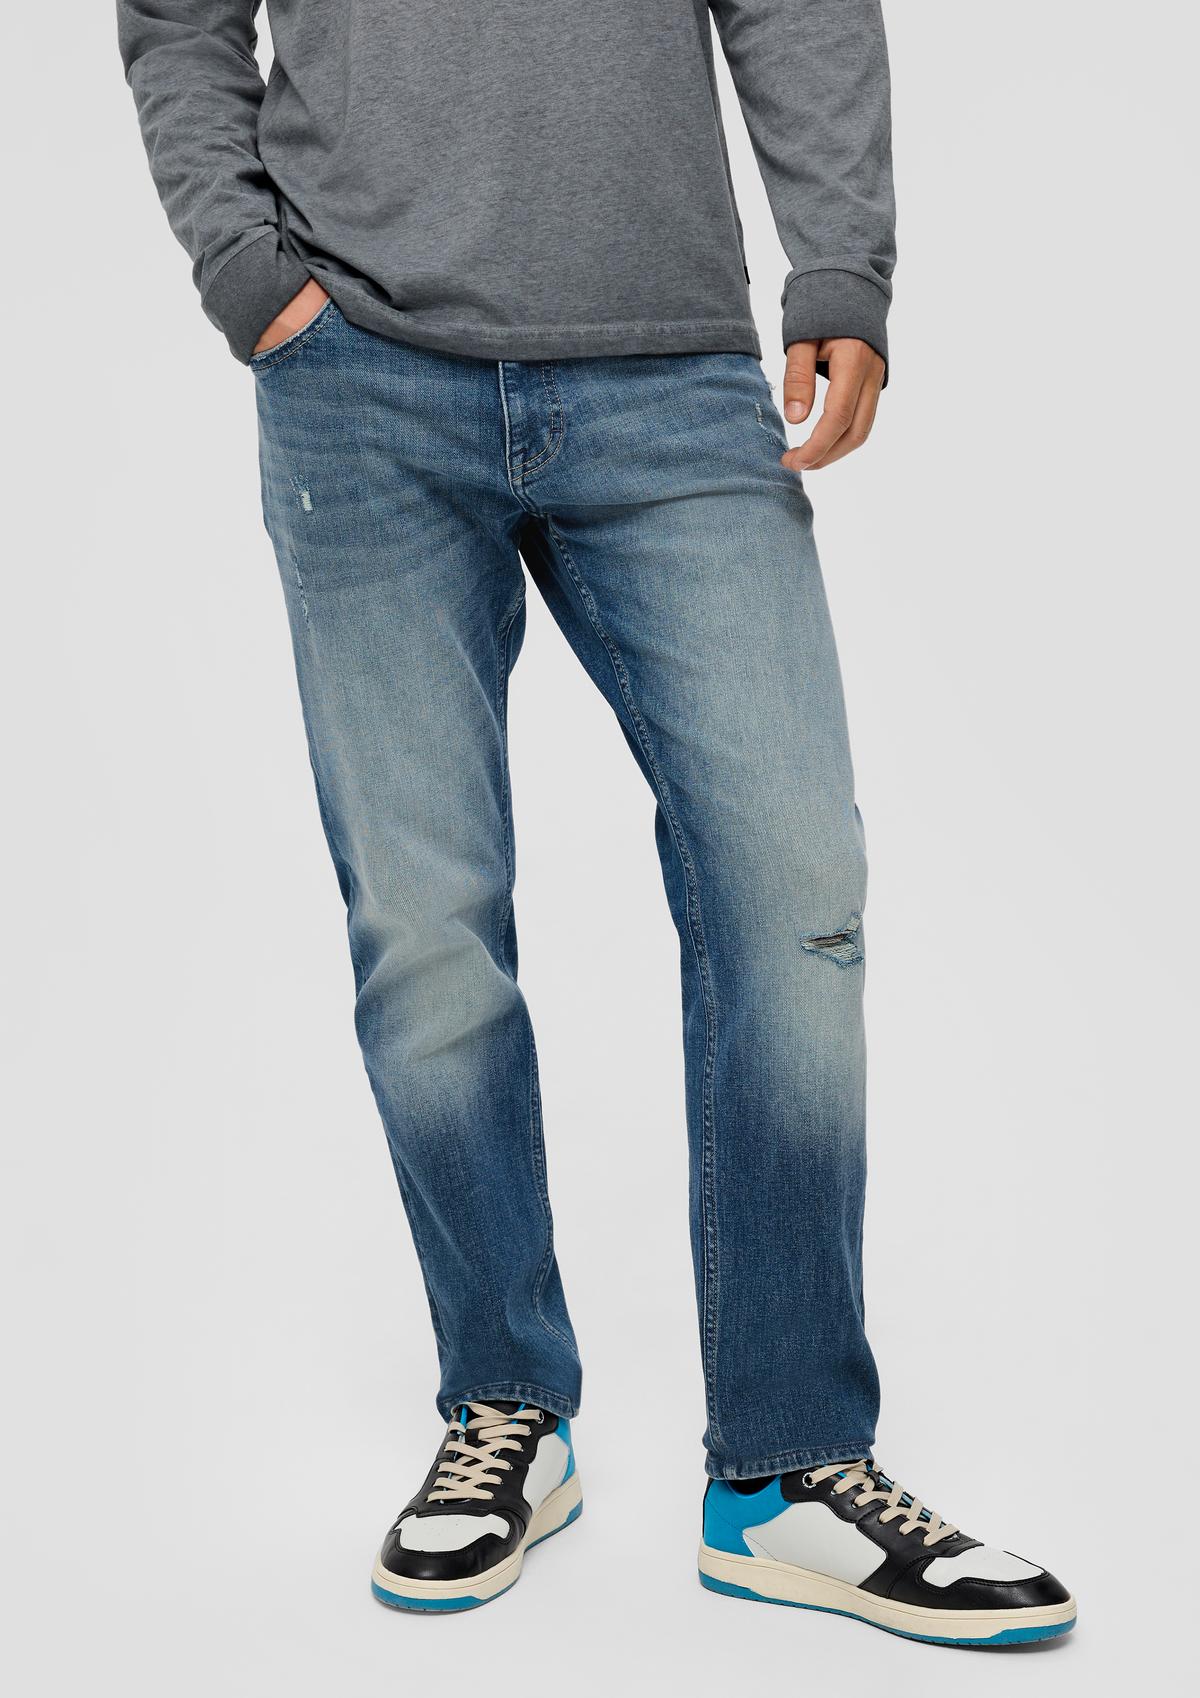 Jeans Pete / Regular Fit / Mid Rise / Straight Leg